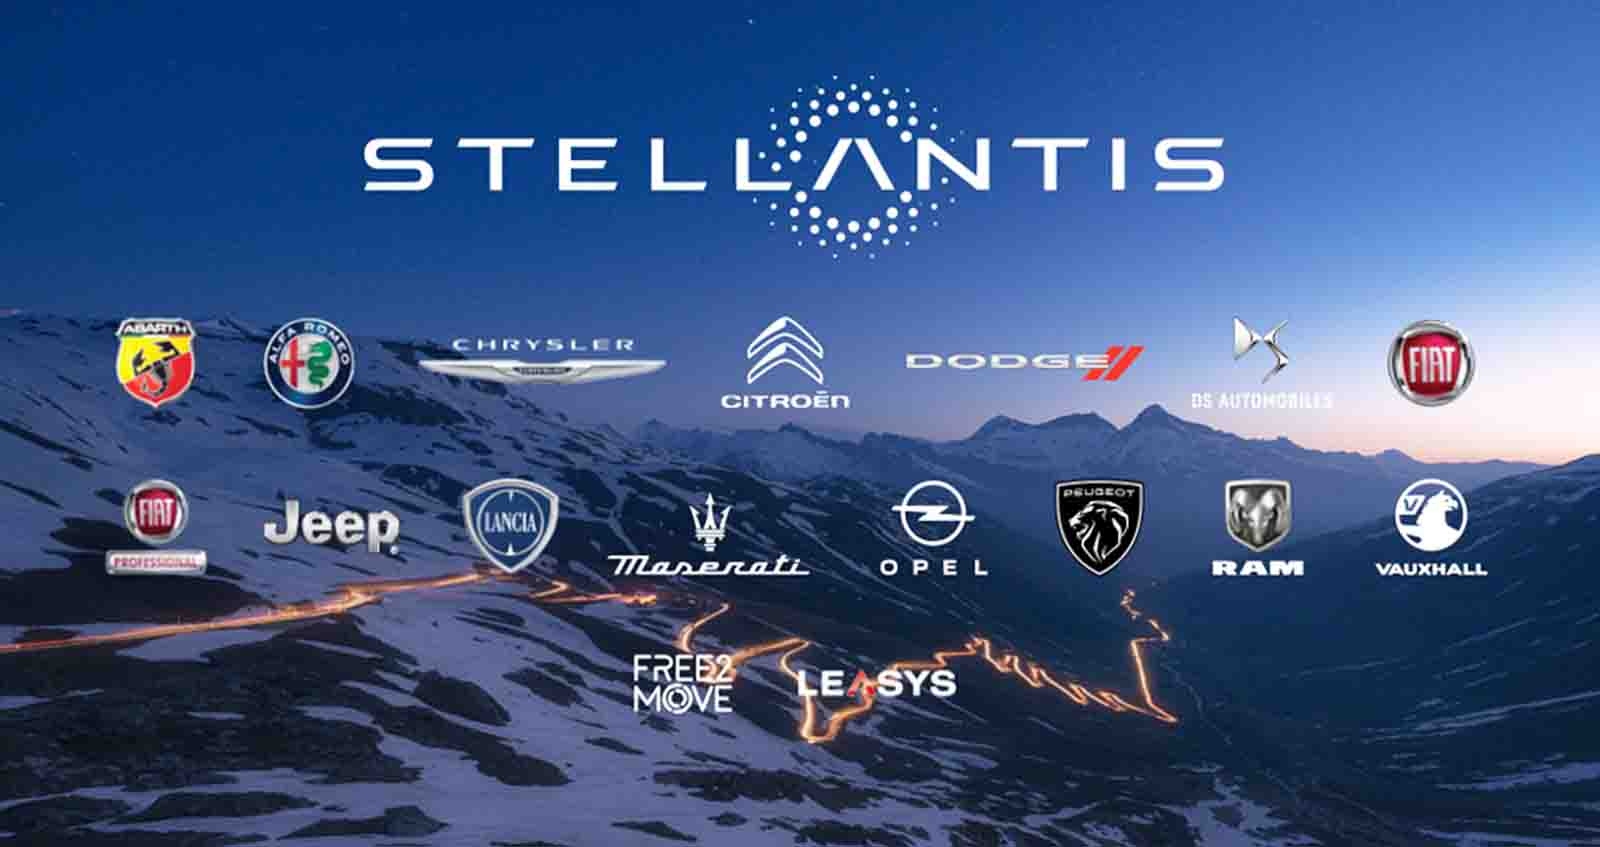 Stellantis เน้นย้ำ ผลิตรถยนต์ไฟฟ้า มากกว่าสันดาป ท่ามกลางปัญหาขาดแคลนชิป